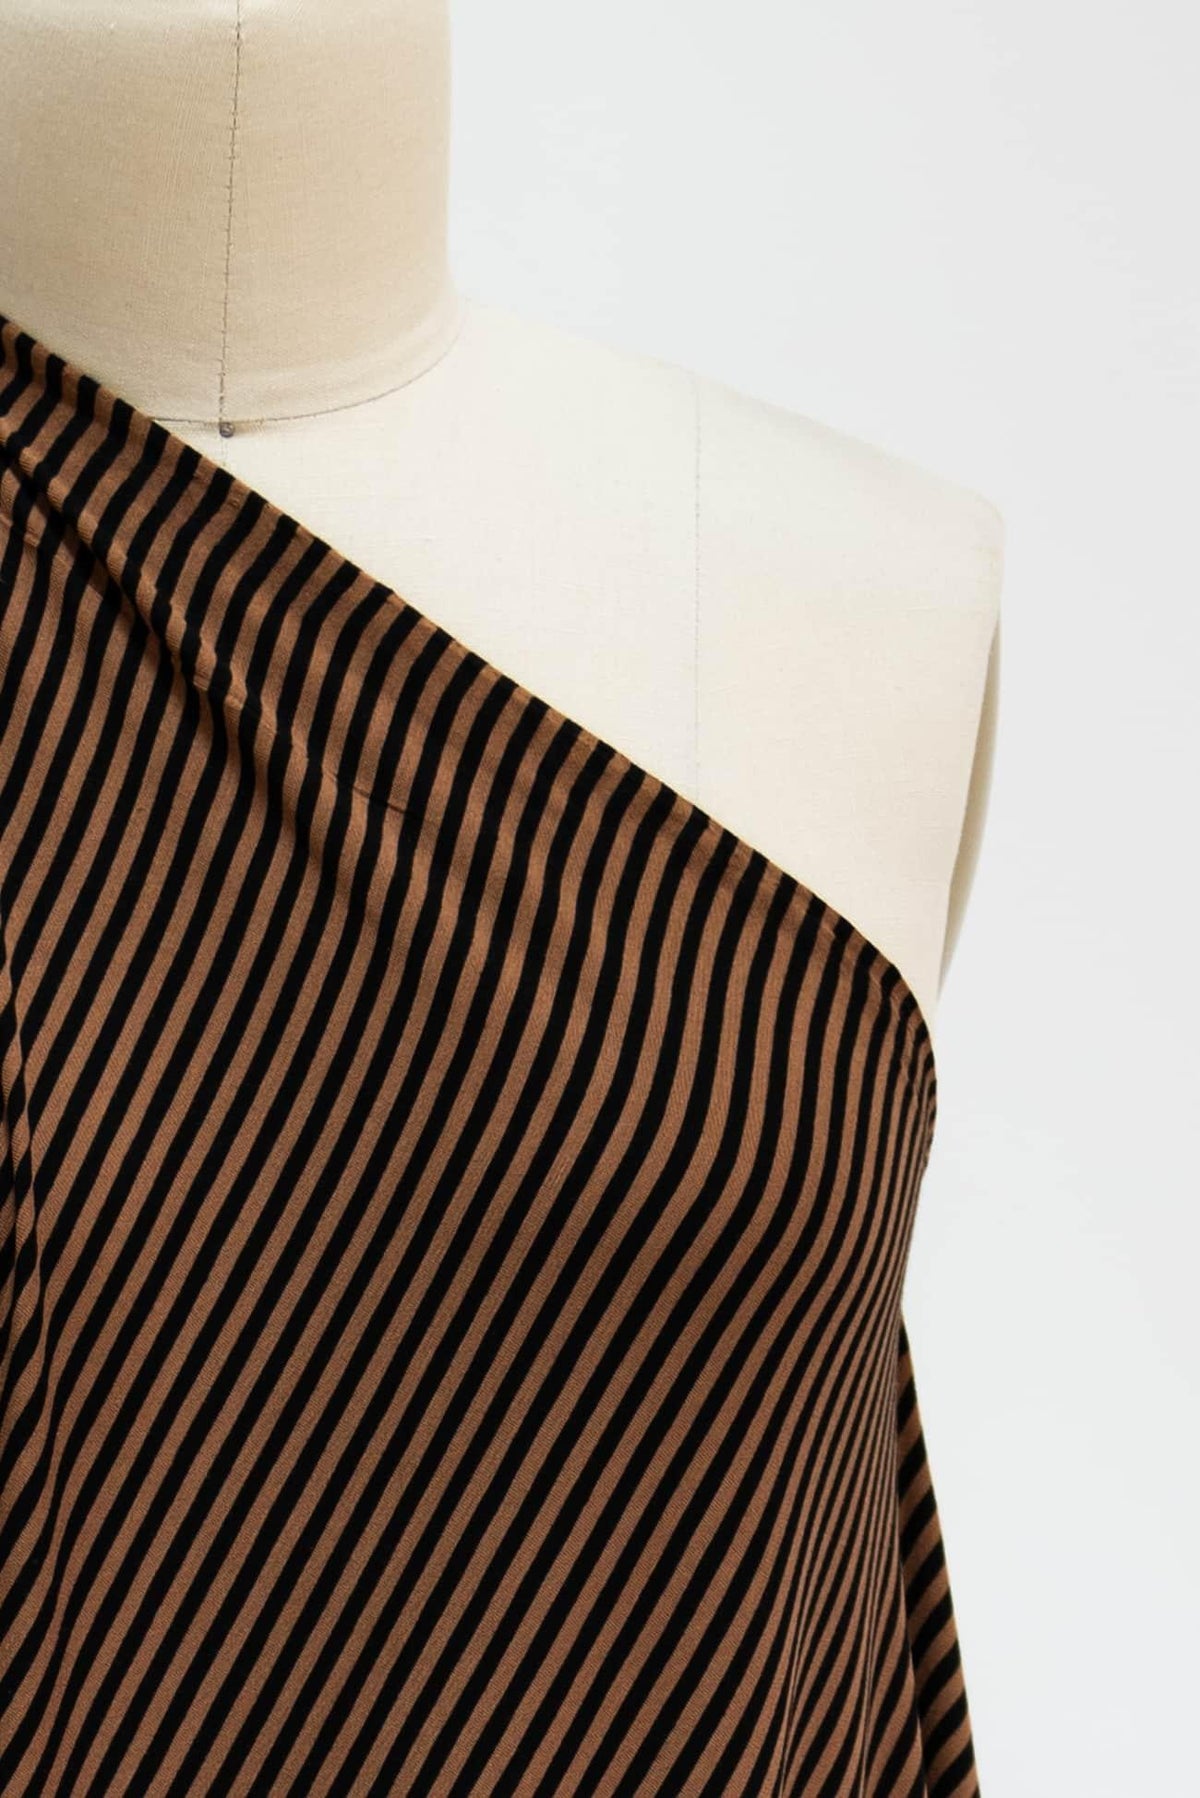 Ry Cooder Stripe Bamboo Rayon/Spandex Knit - Marcy Tilton Fabrics